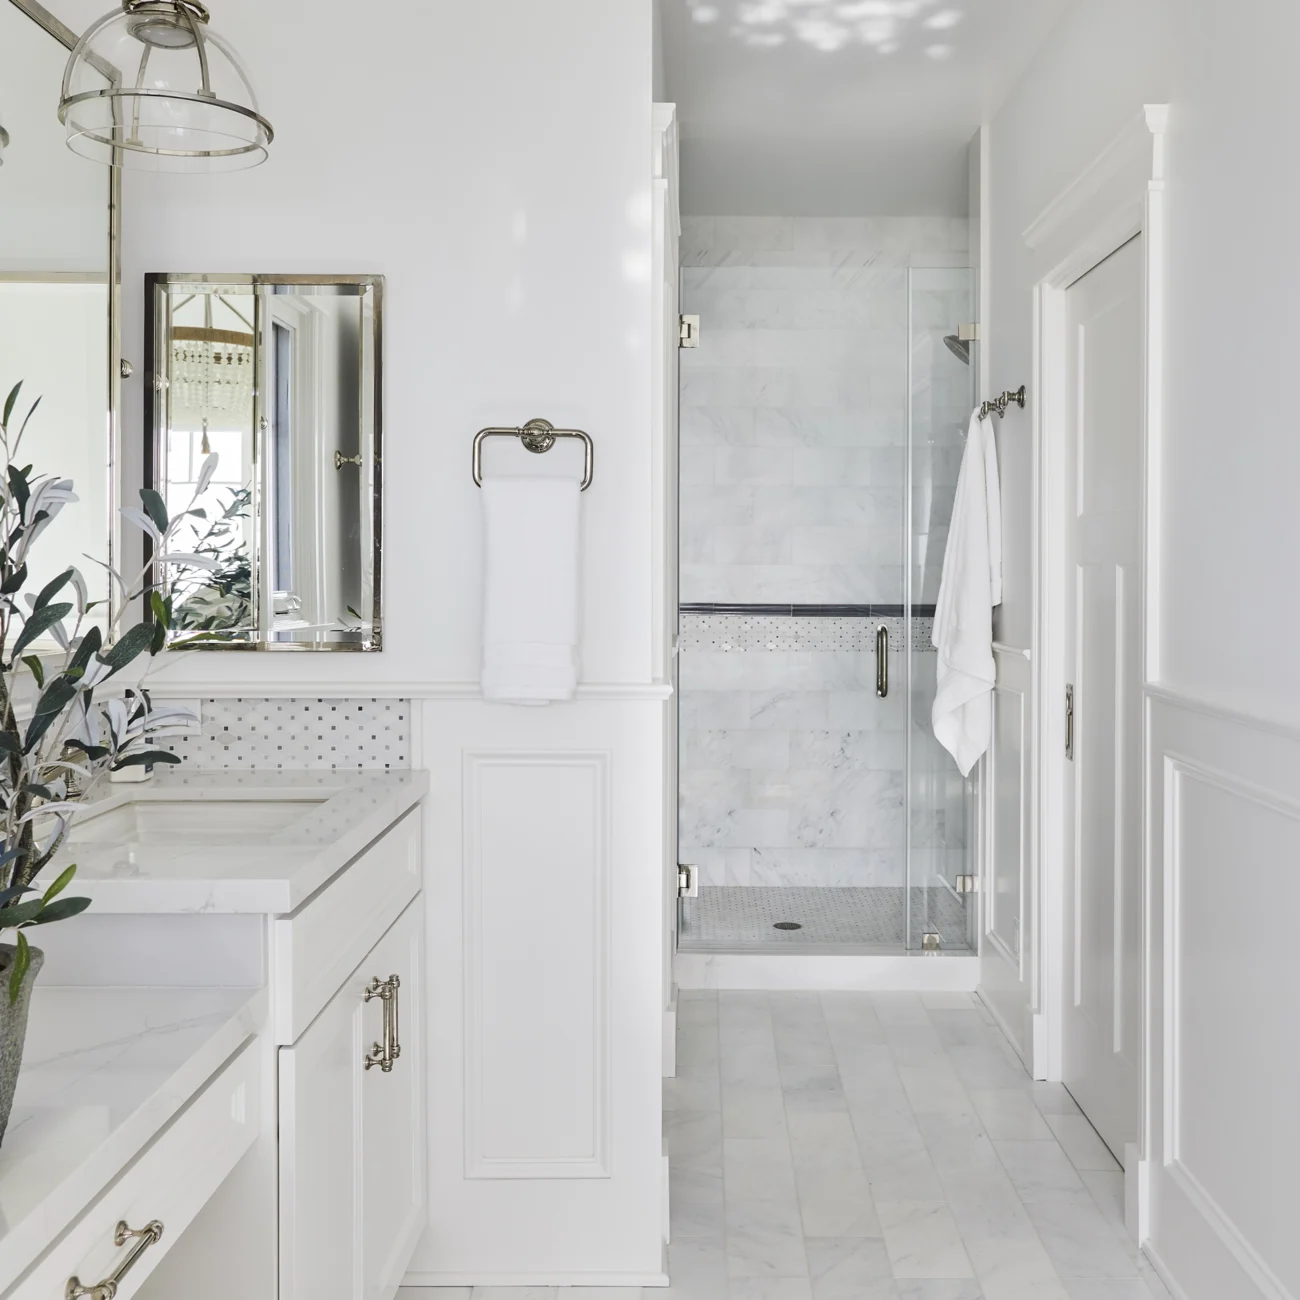 Christine Vroom Interiors Vigilance | Bright white marble bathroom vanity and glass shower